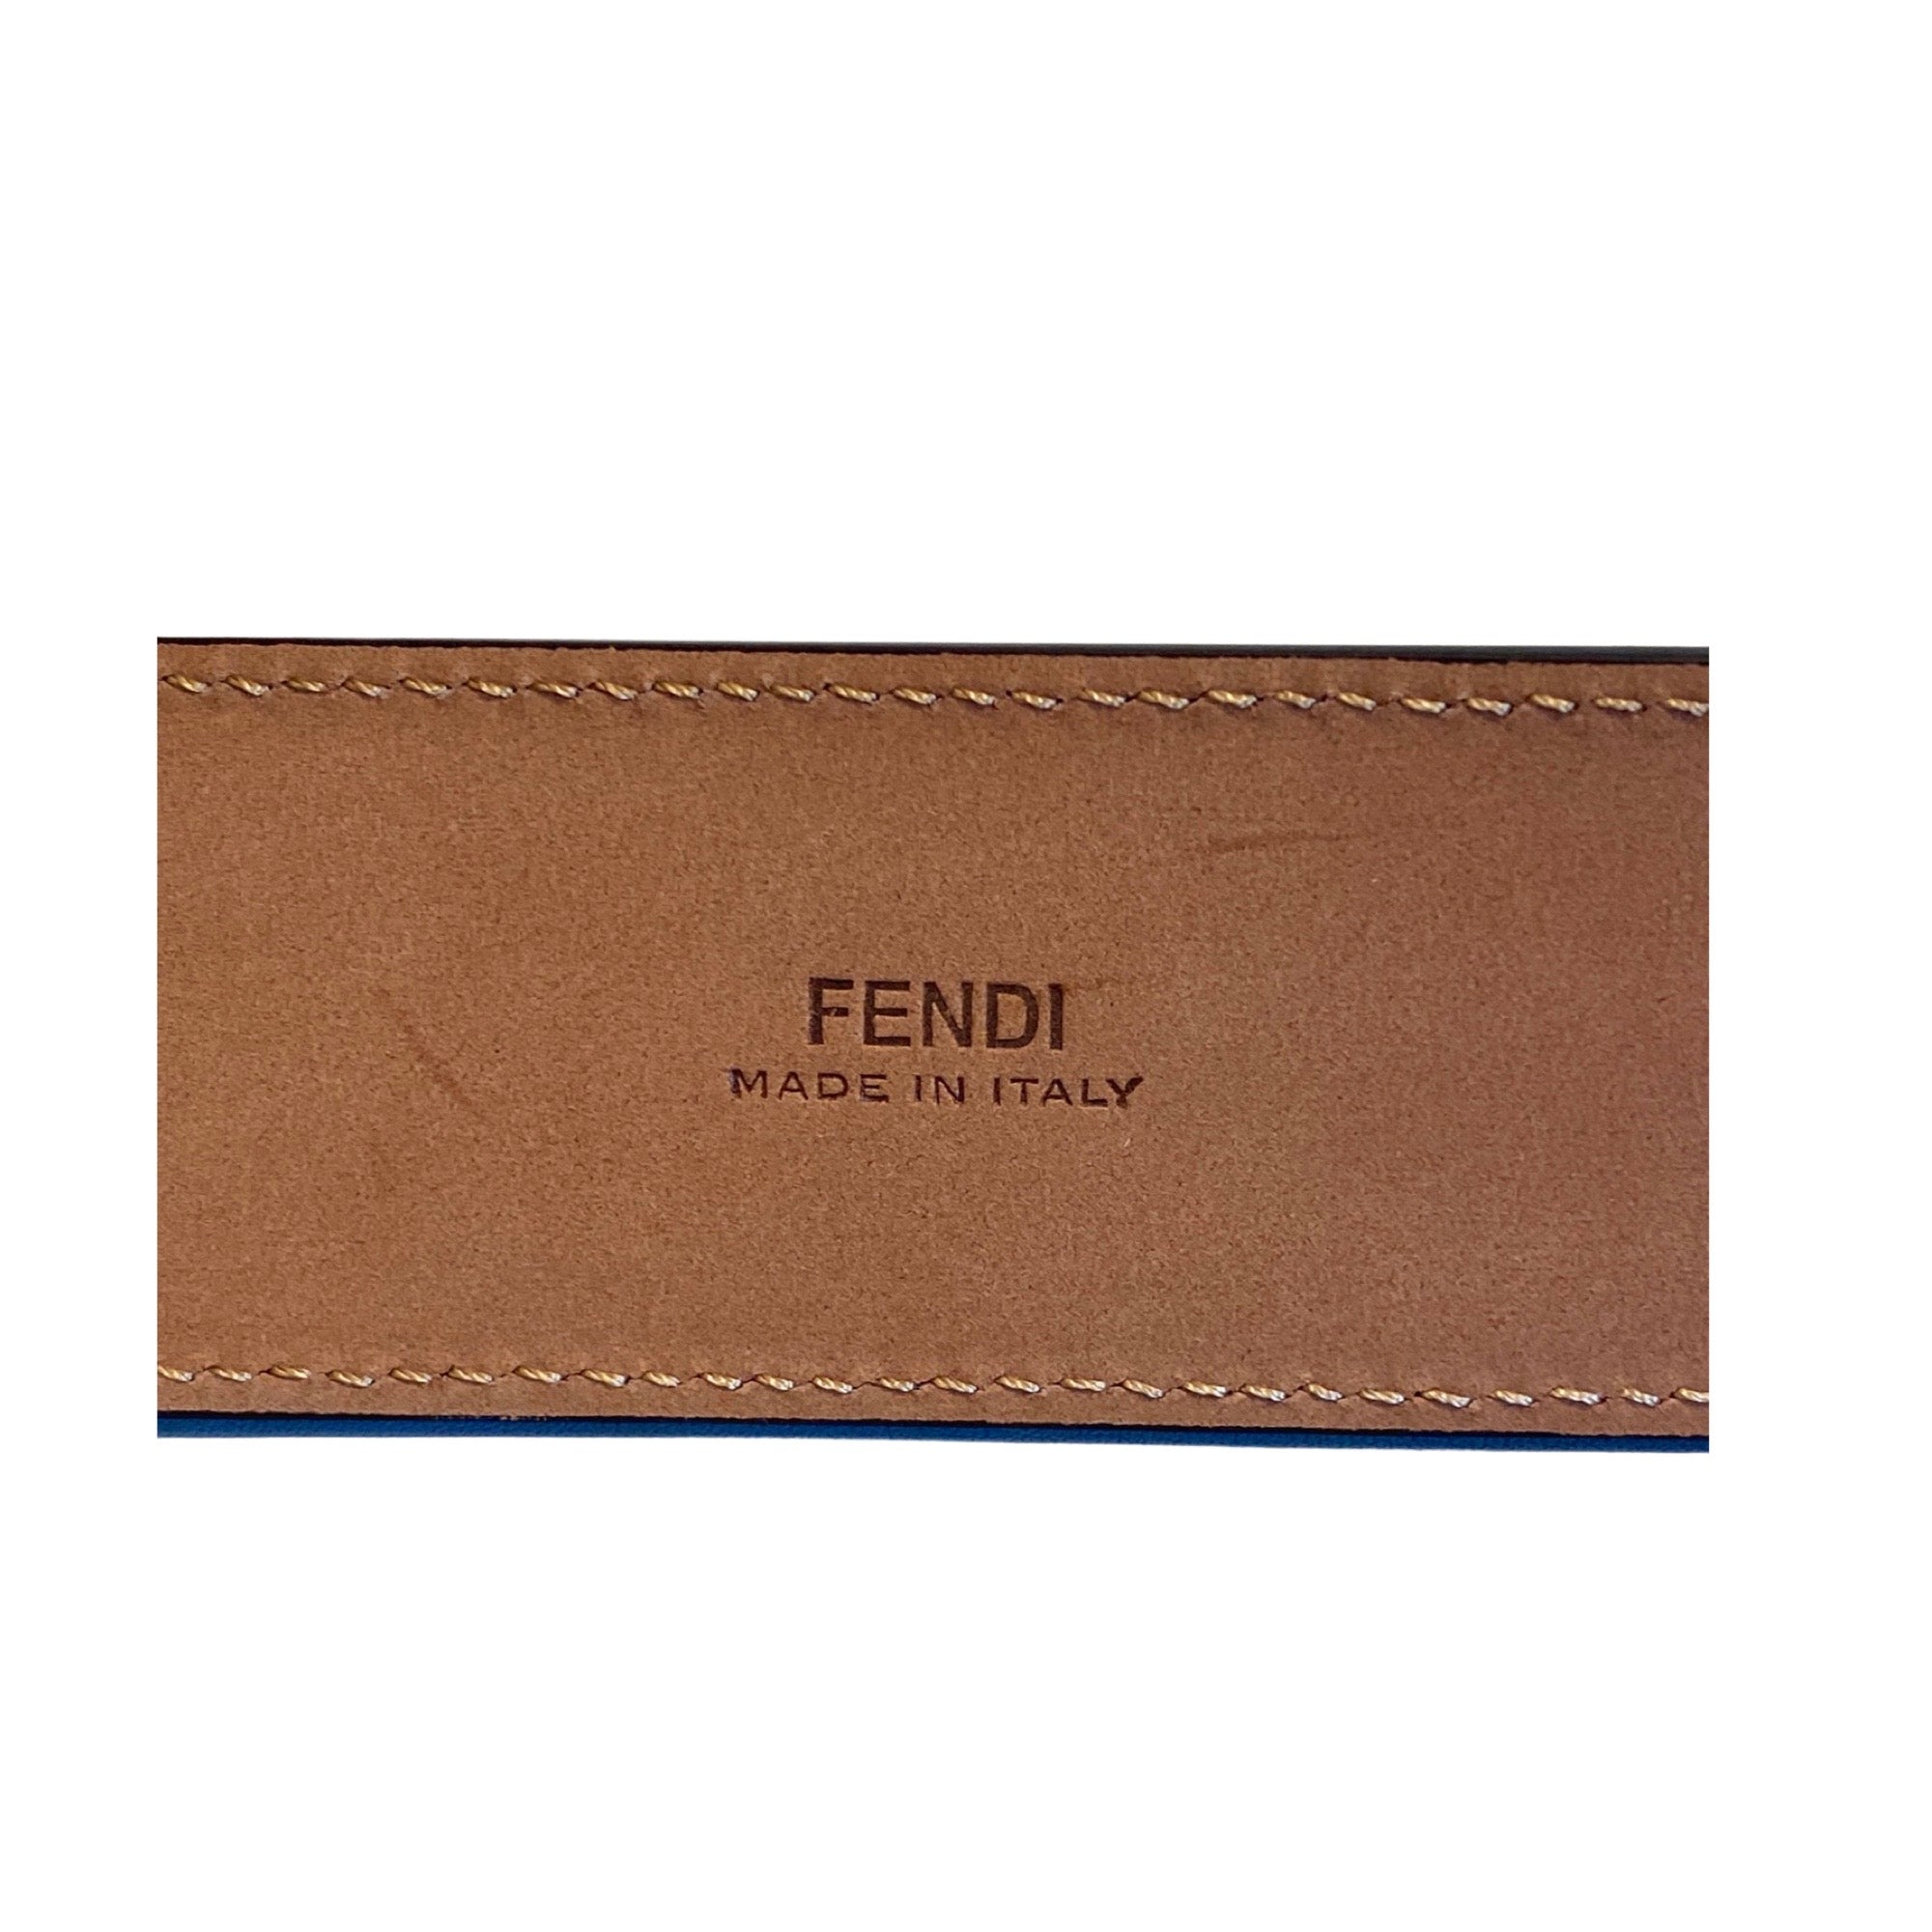 Fendi Black Smooth Calfskin Leather Belt Size 105